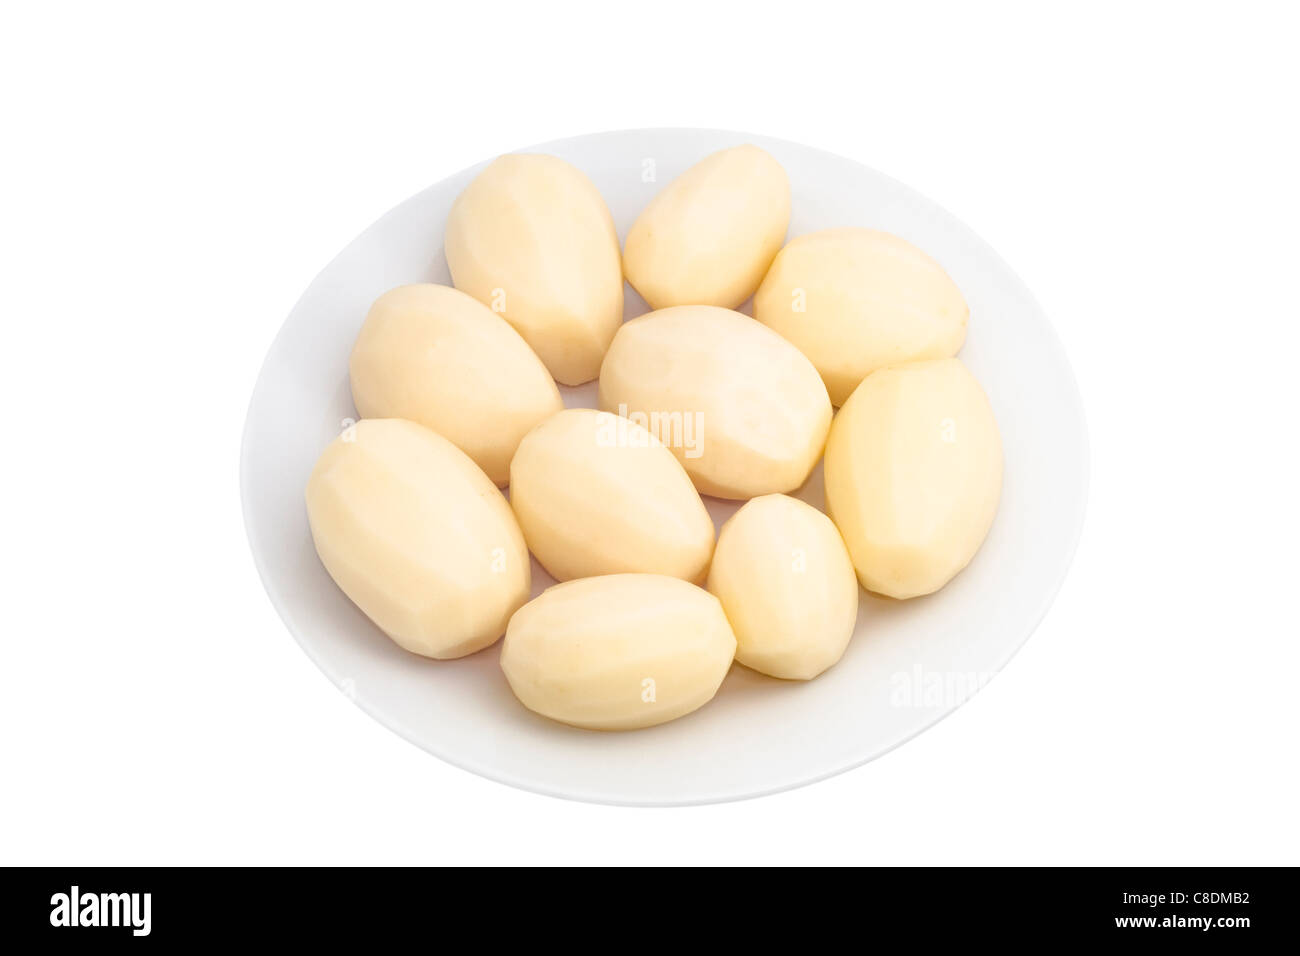 Peeled potatoes on plate, isolated on white background. Stock Photo